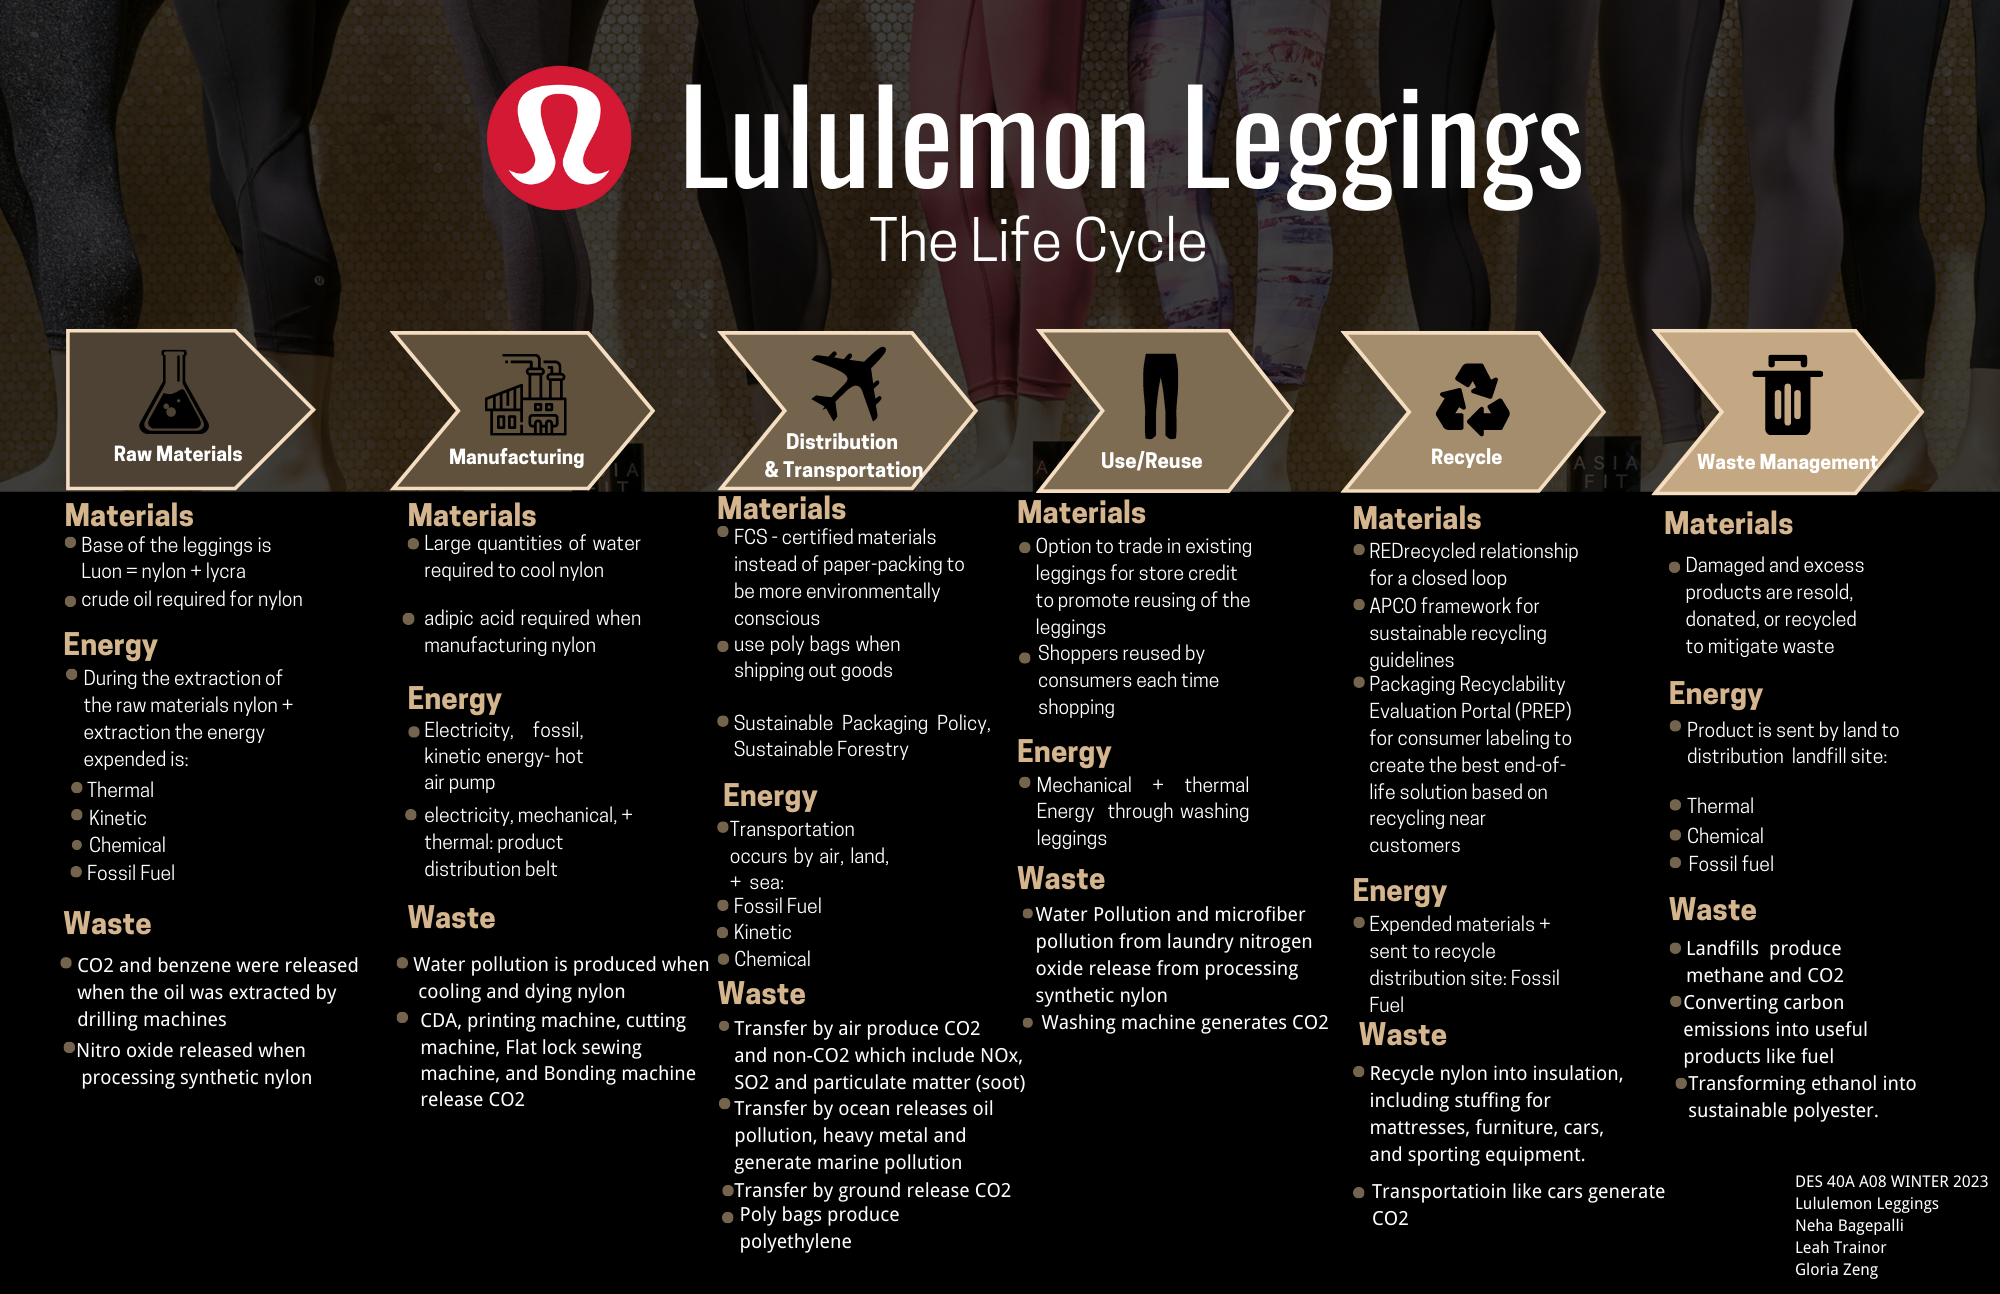 Lululemon leggings — Design Life-Cycle